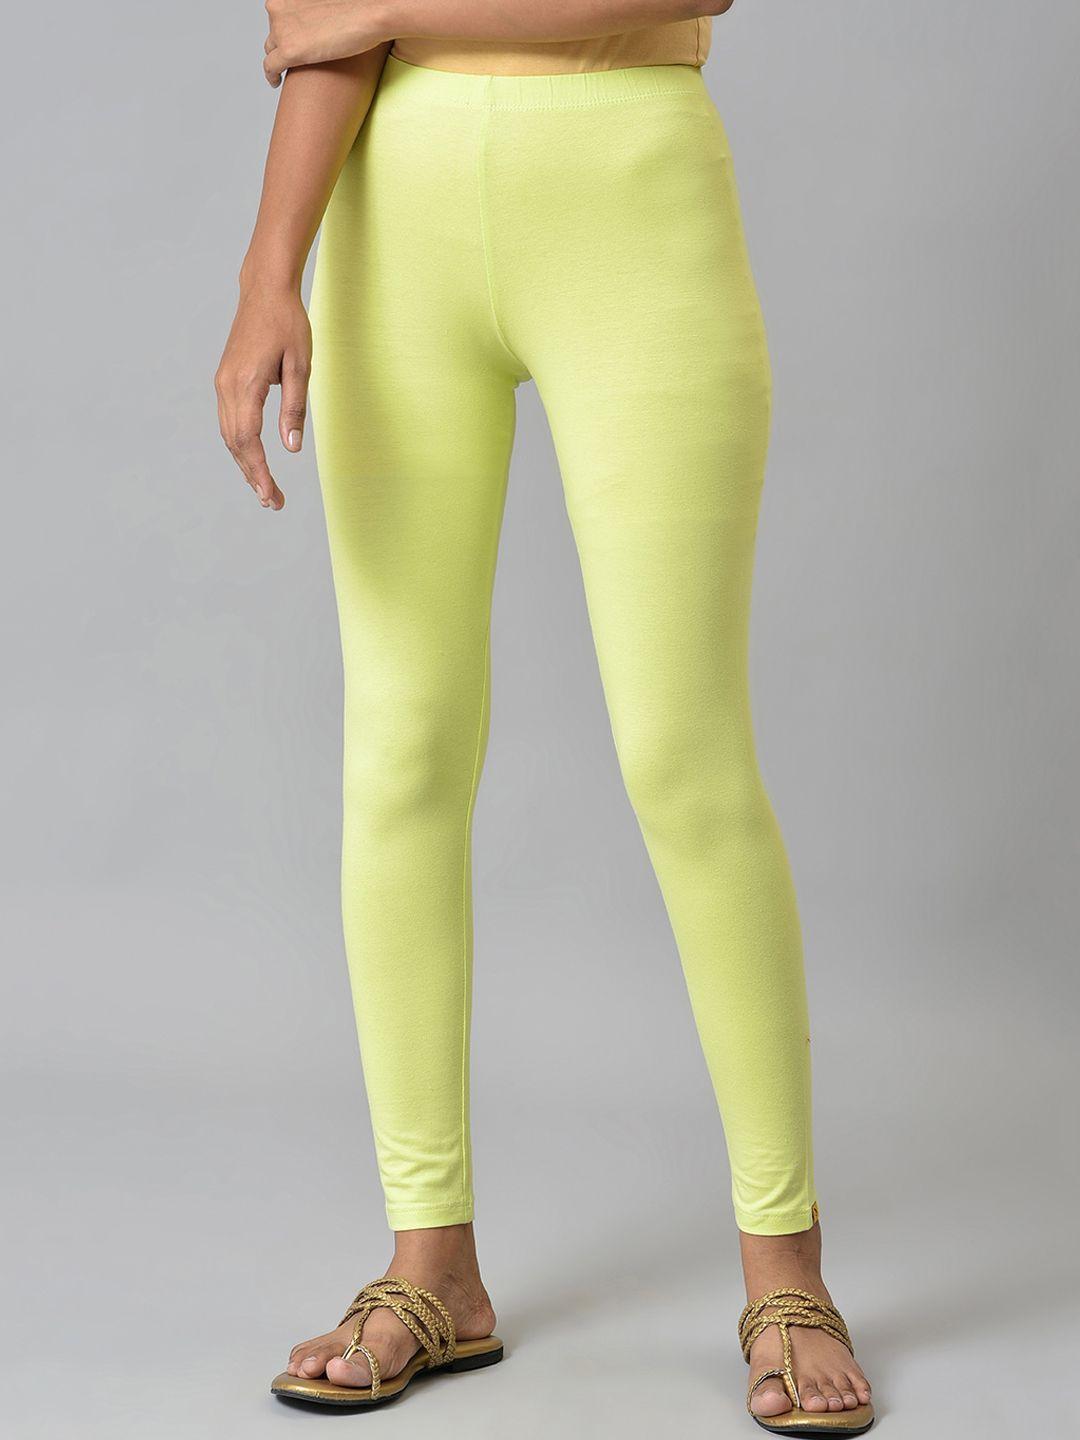 aurelia-women-yellow-solid-ankle-length-leggings